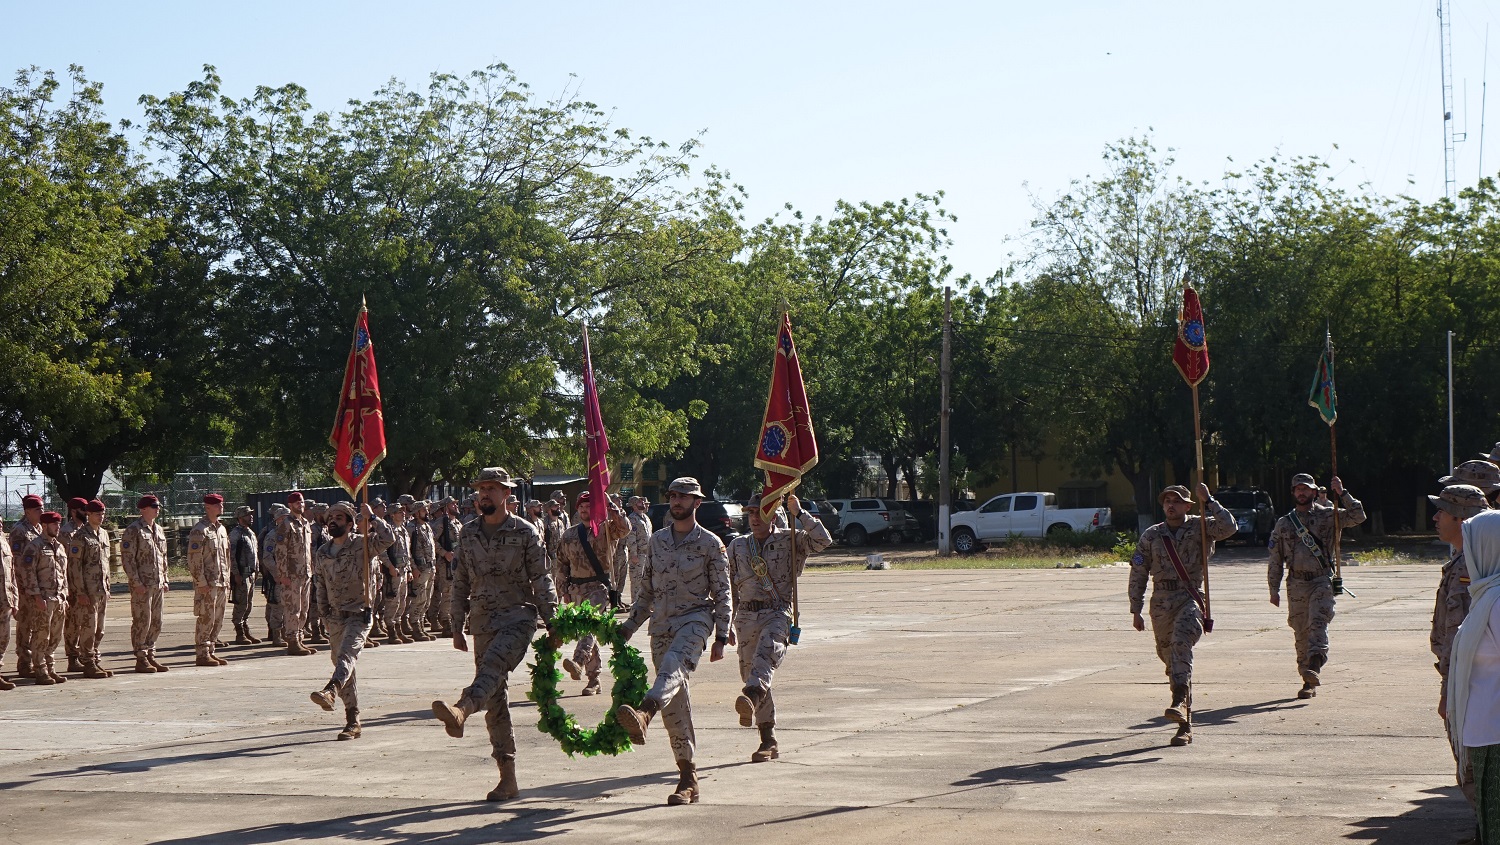 Brigade of the Legion replaces Brigade Canarias in EUTM Mali